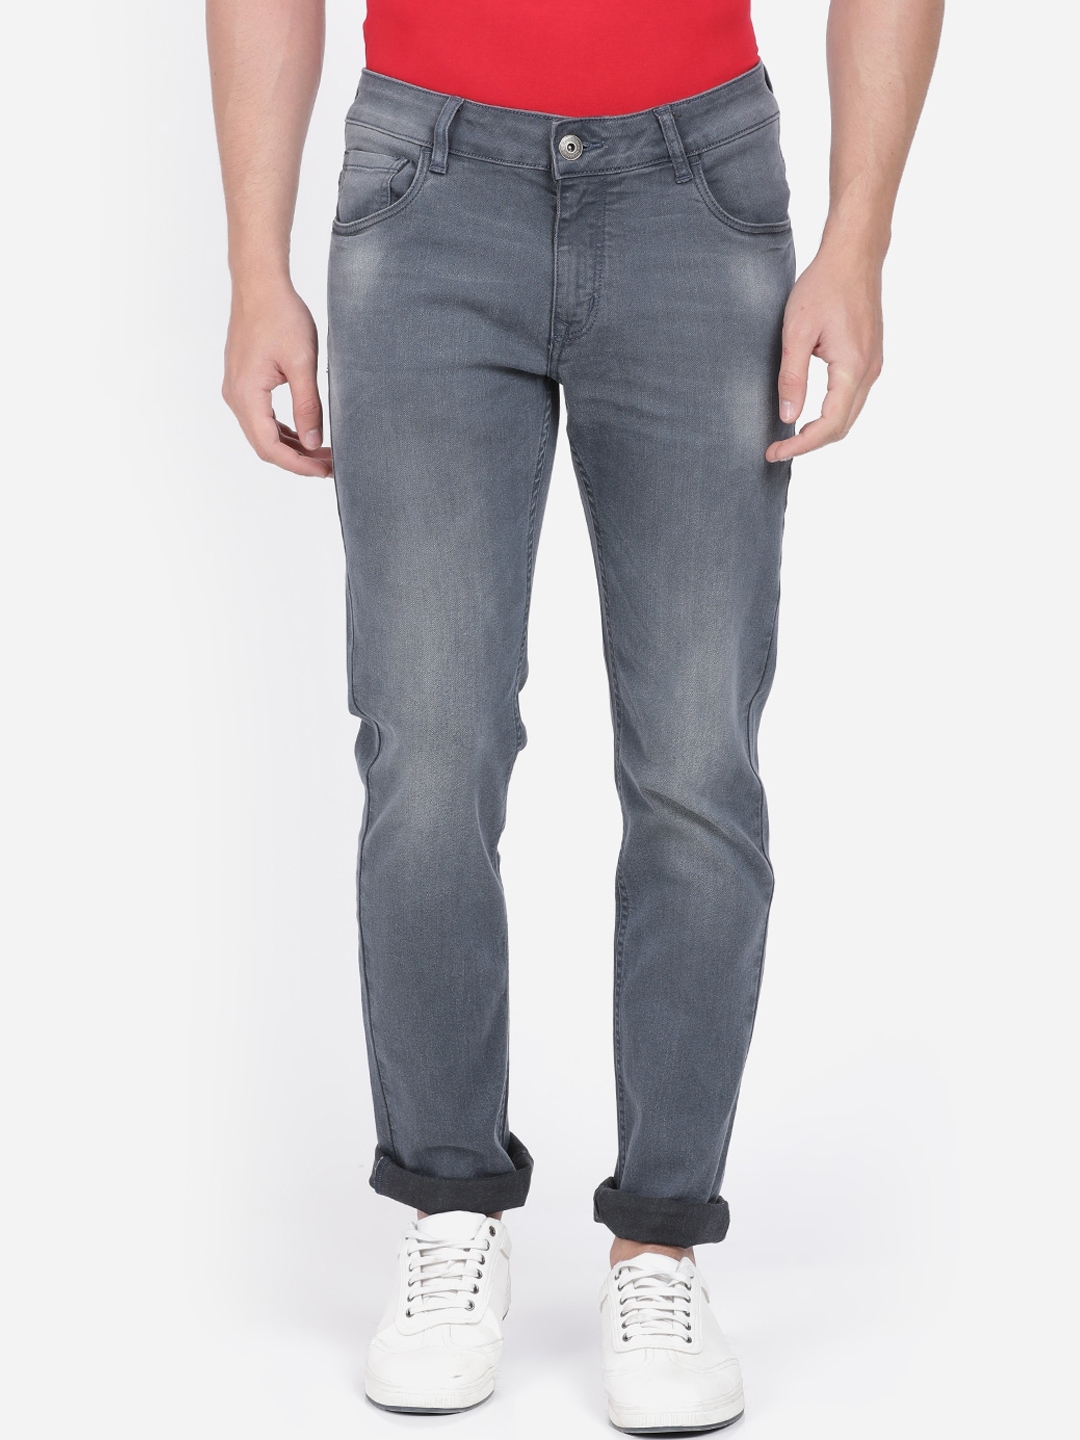 Buy Crocodile Men Grey Slim Fit Jeans - Jeans for Men 13735396 | Myntra